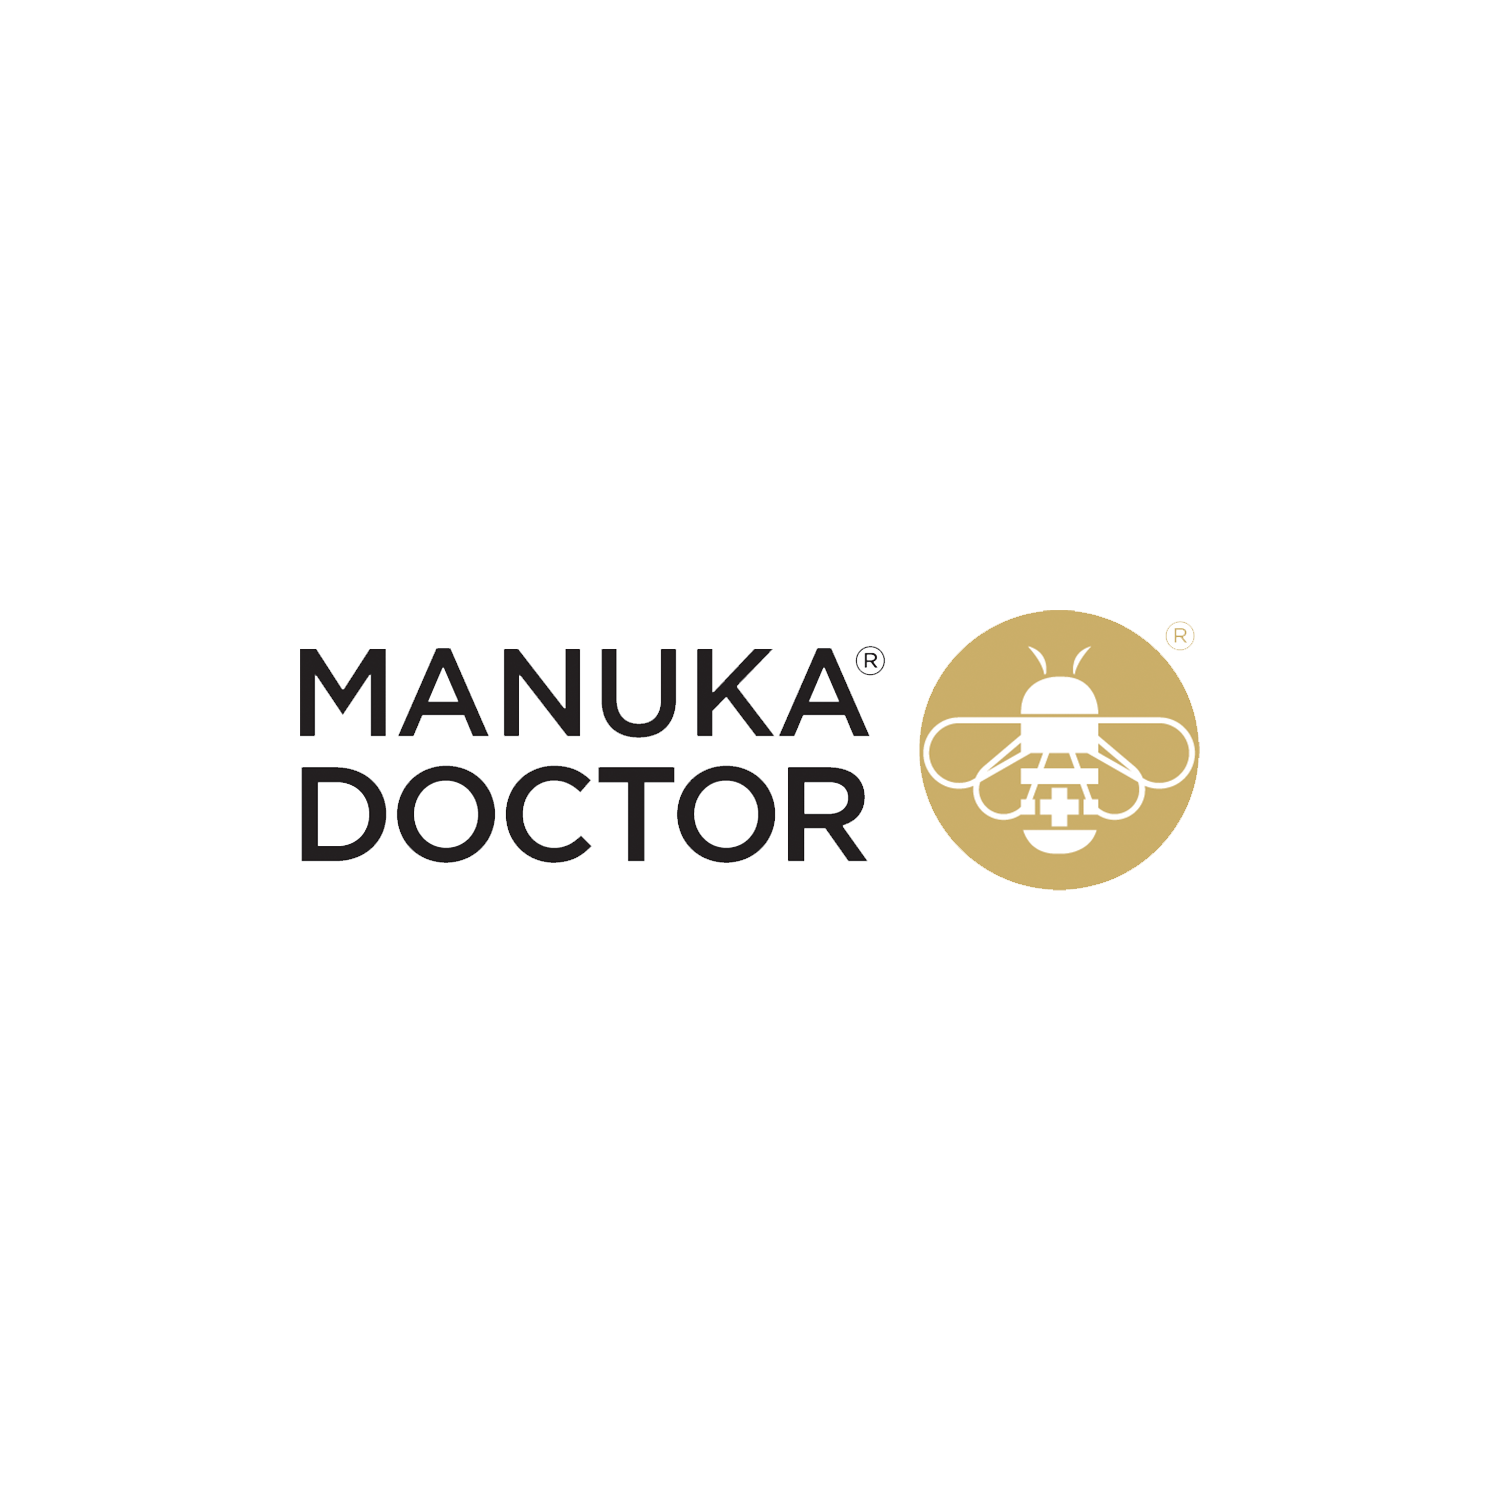 Manuka Doctor Coupons & Promo Codes